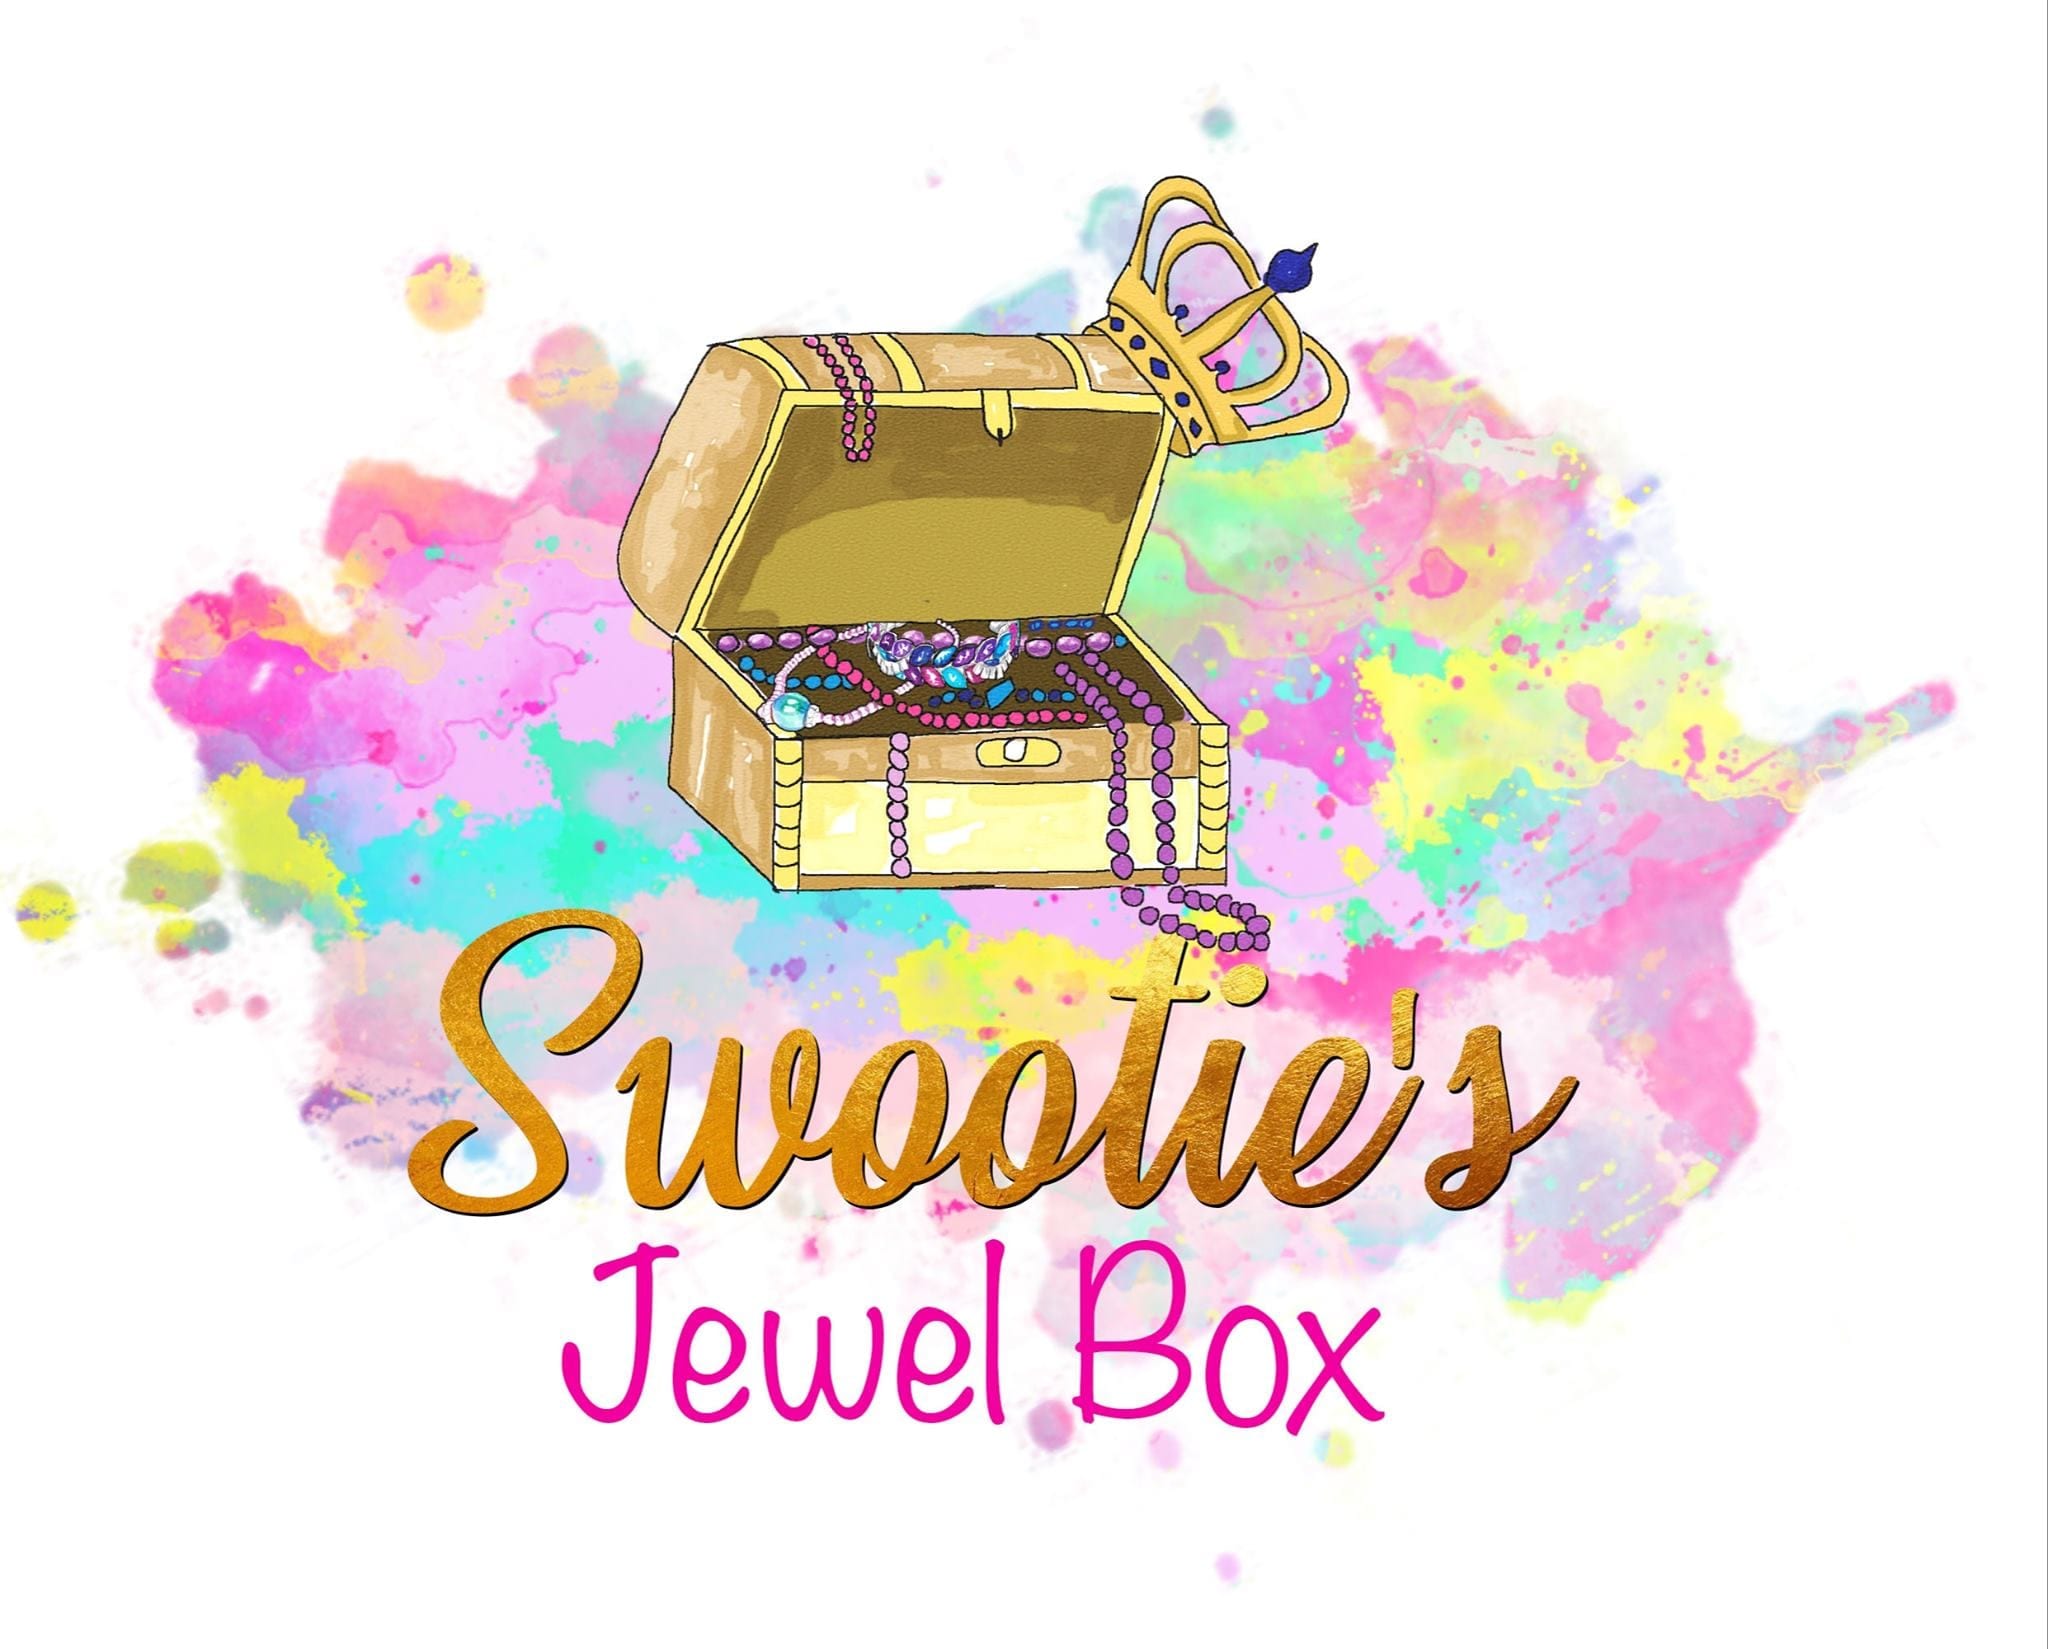 Swootie's Jewel Box